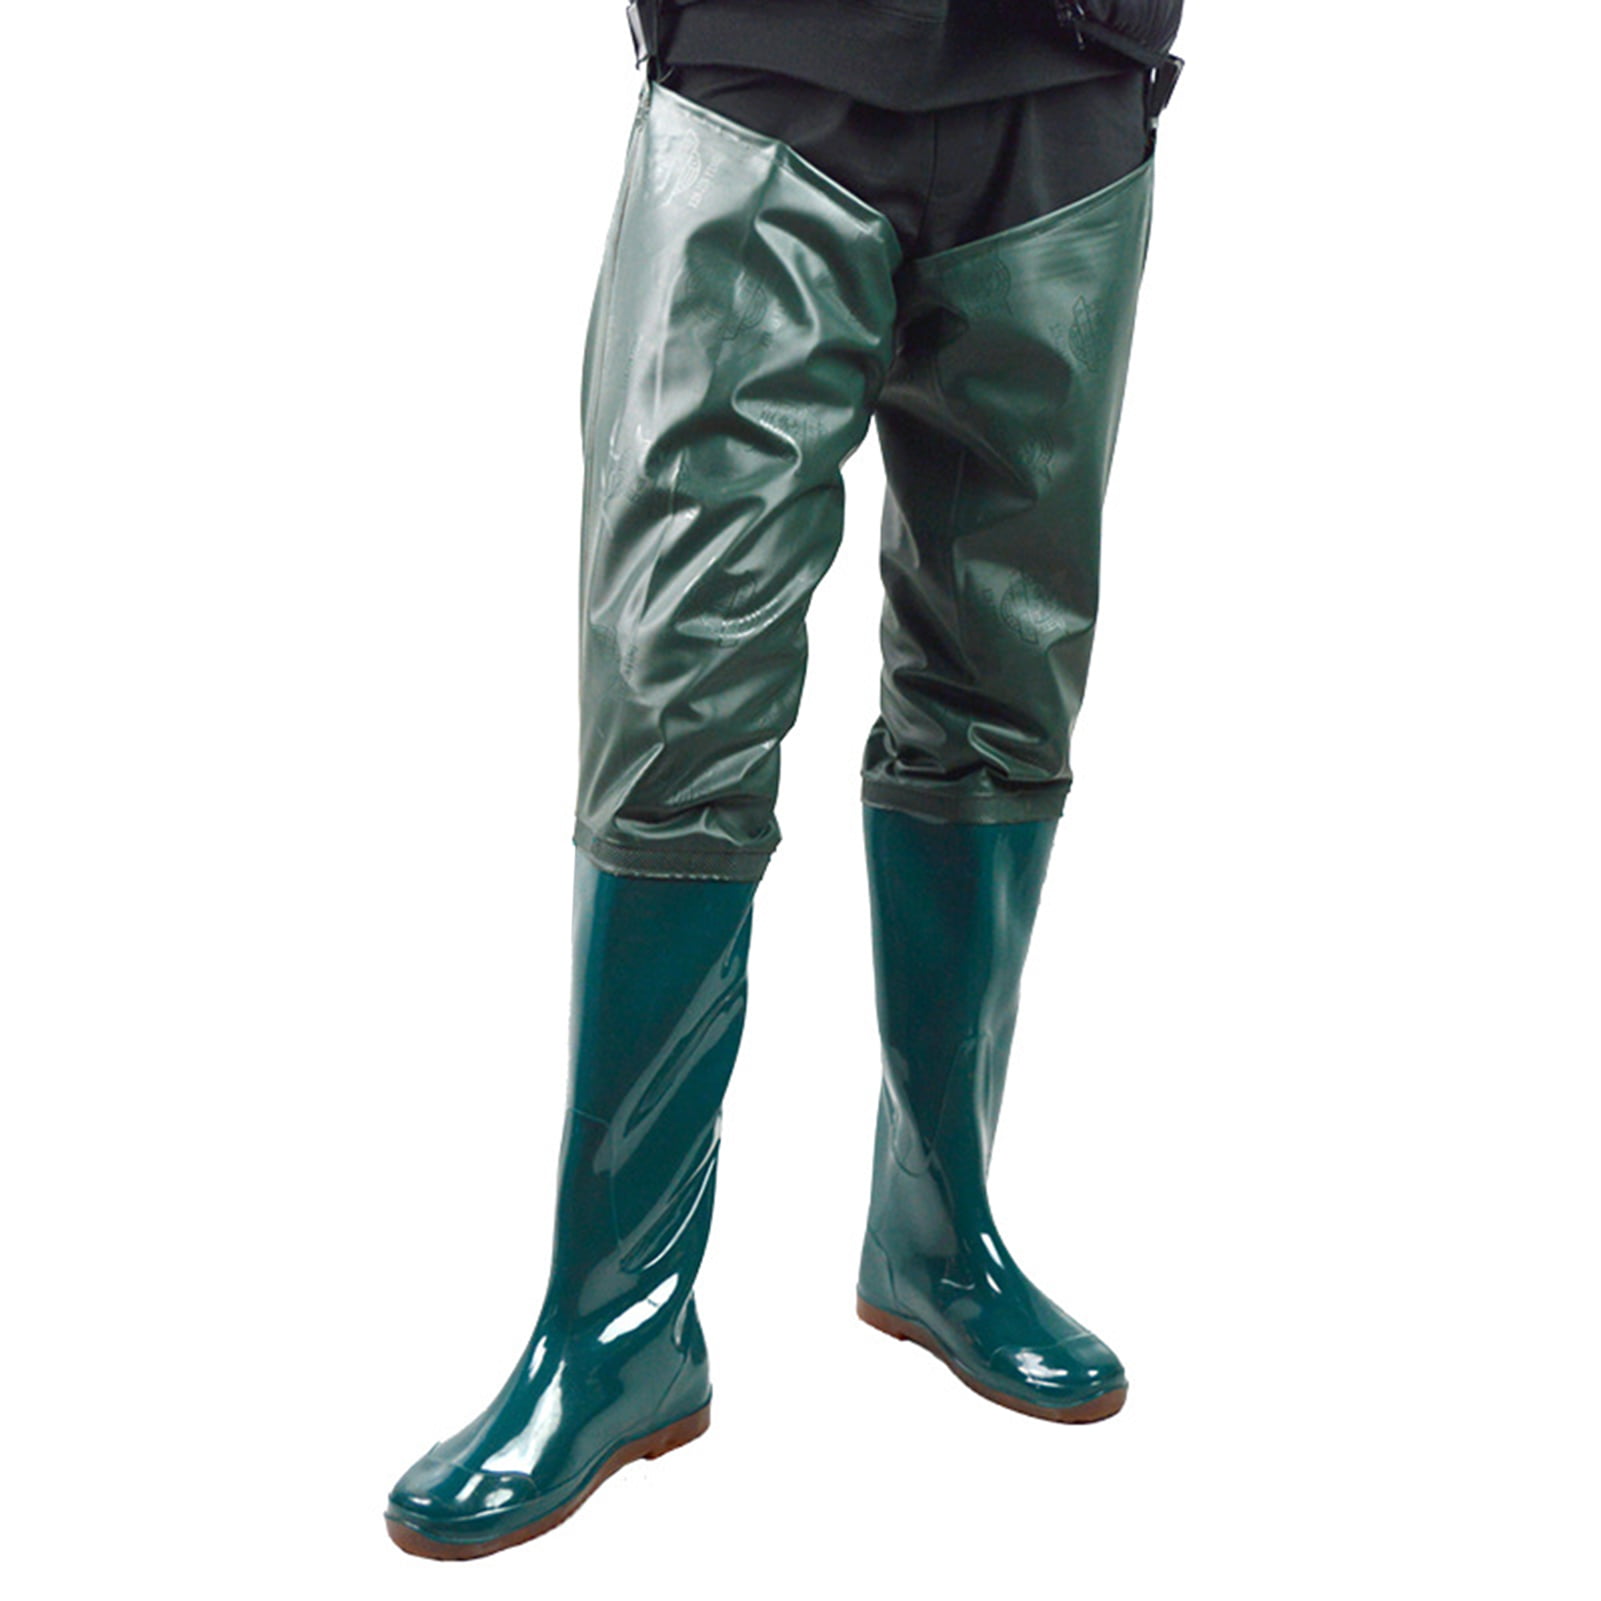 Men Thigh Wader Boots Neoprene Rain Waterproof Fishing Outdoor Trousers Pants 